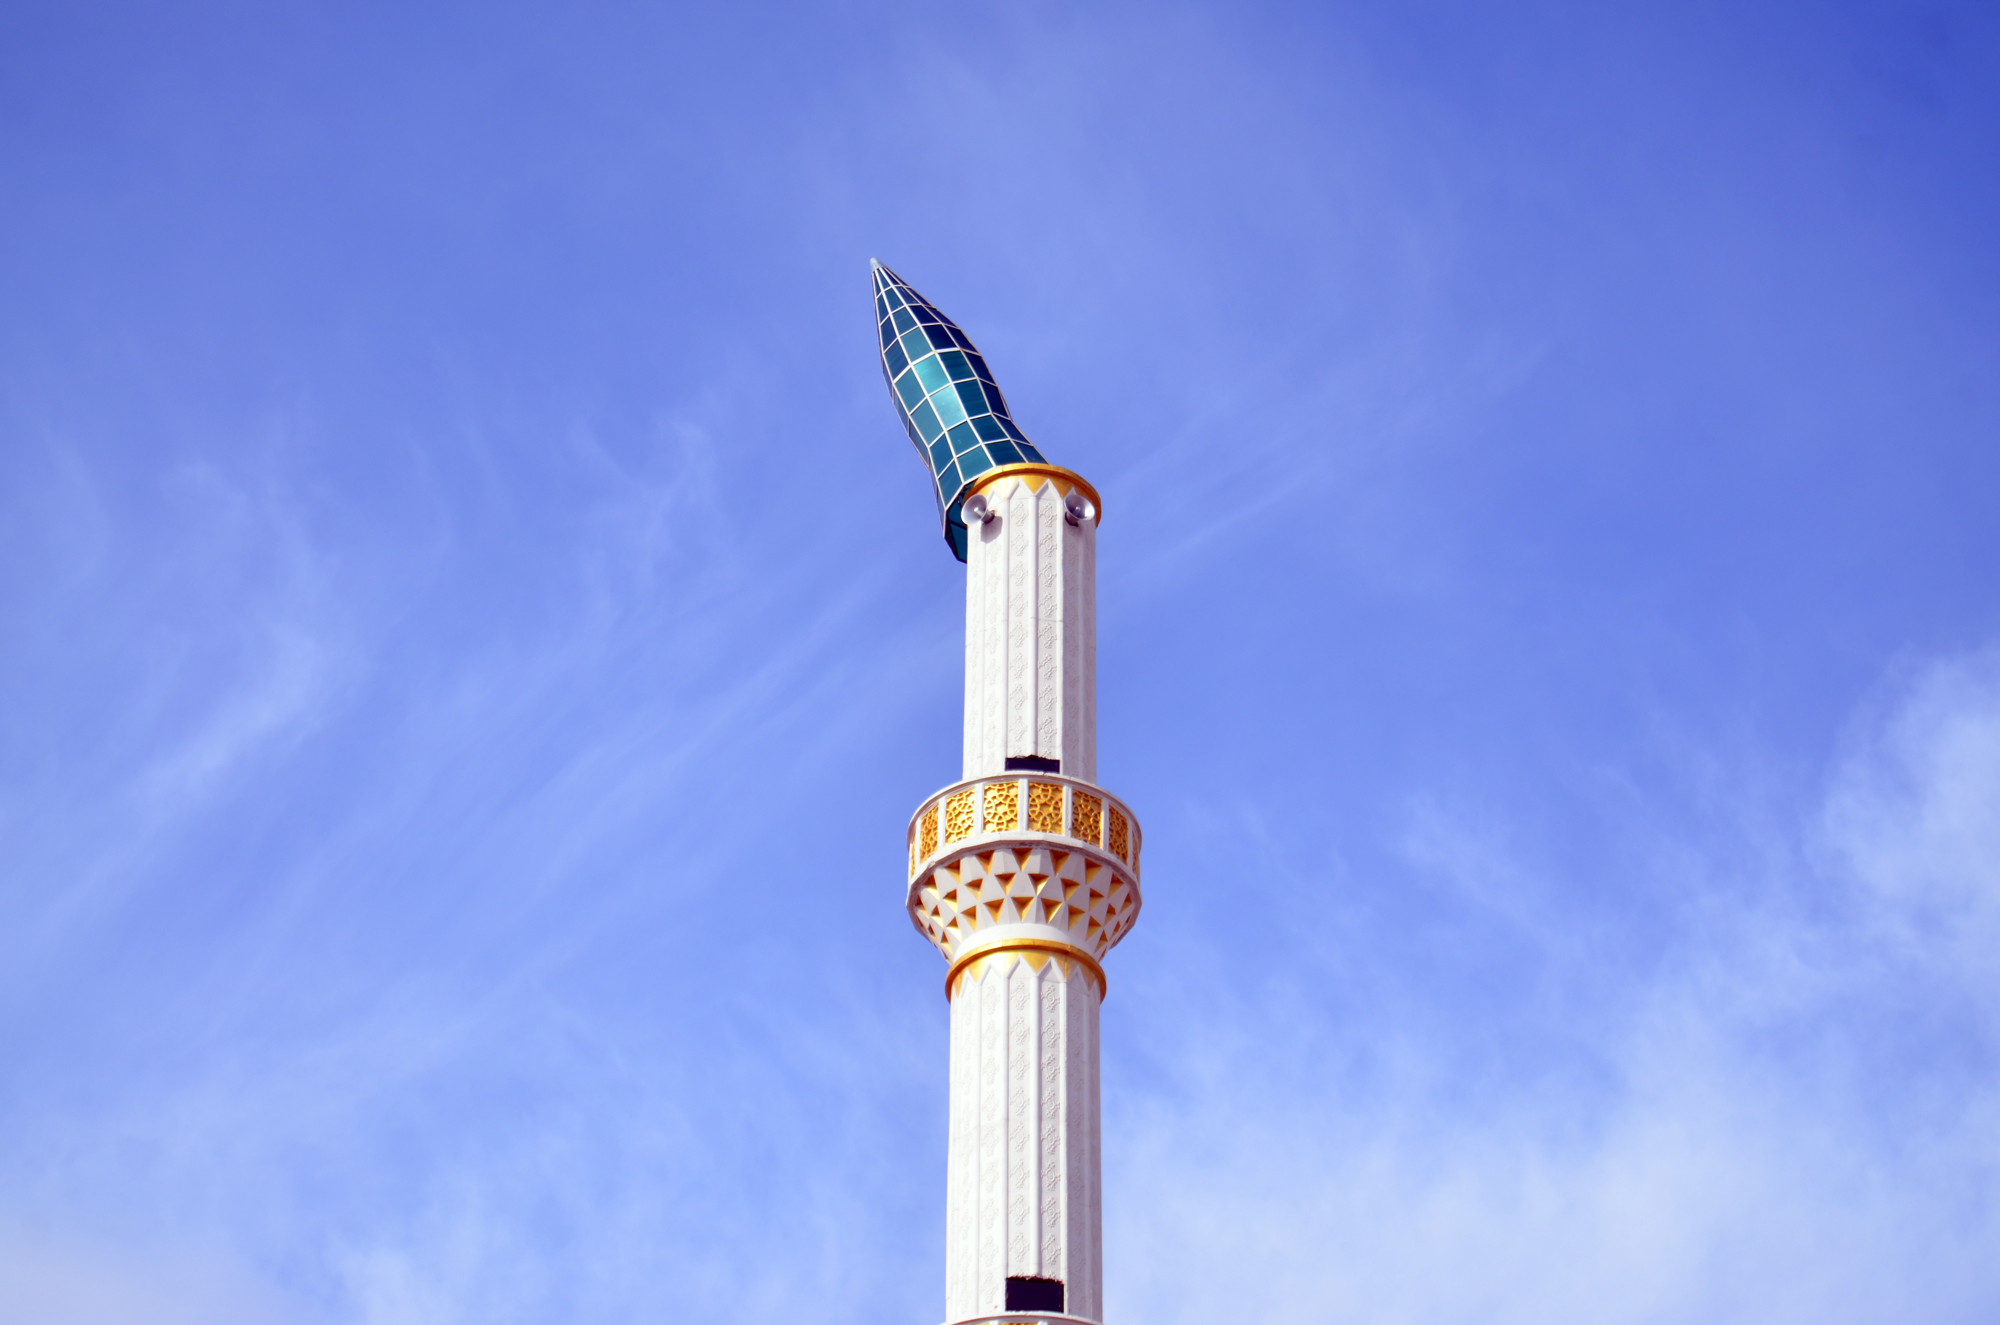 siddetli-ruzgar-minarenin-kulahini-soktu-8506-dhaphoto2.jpg